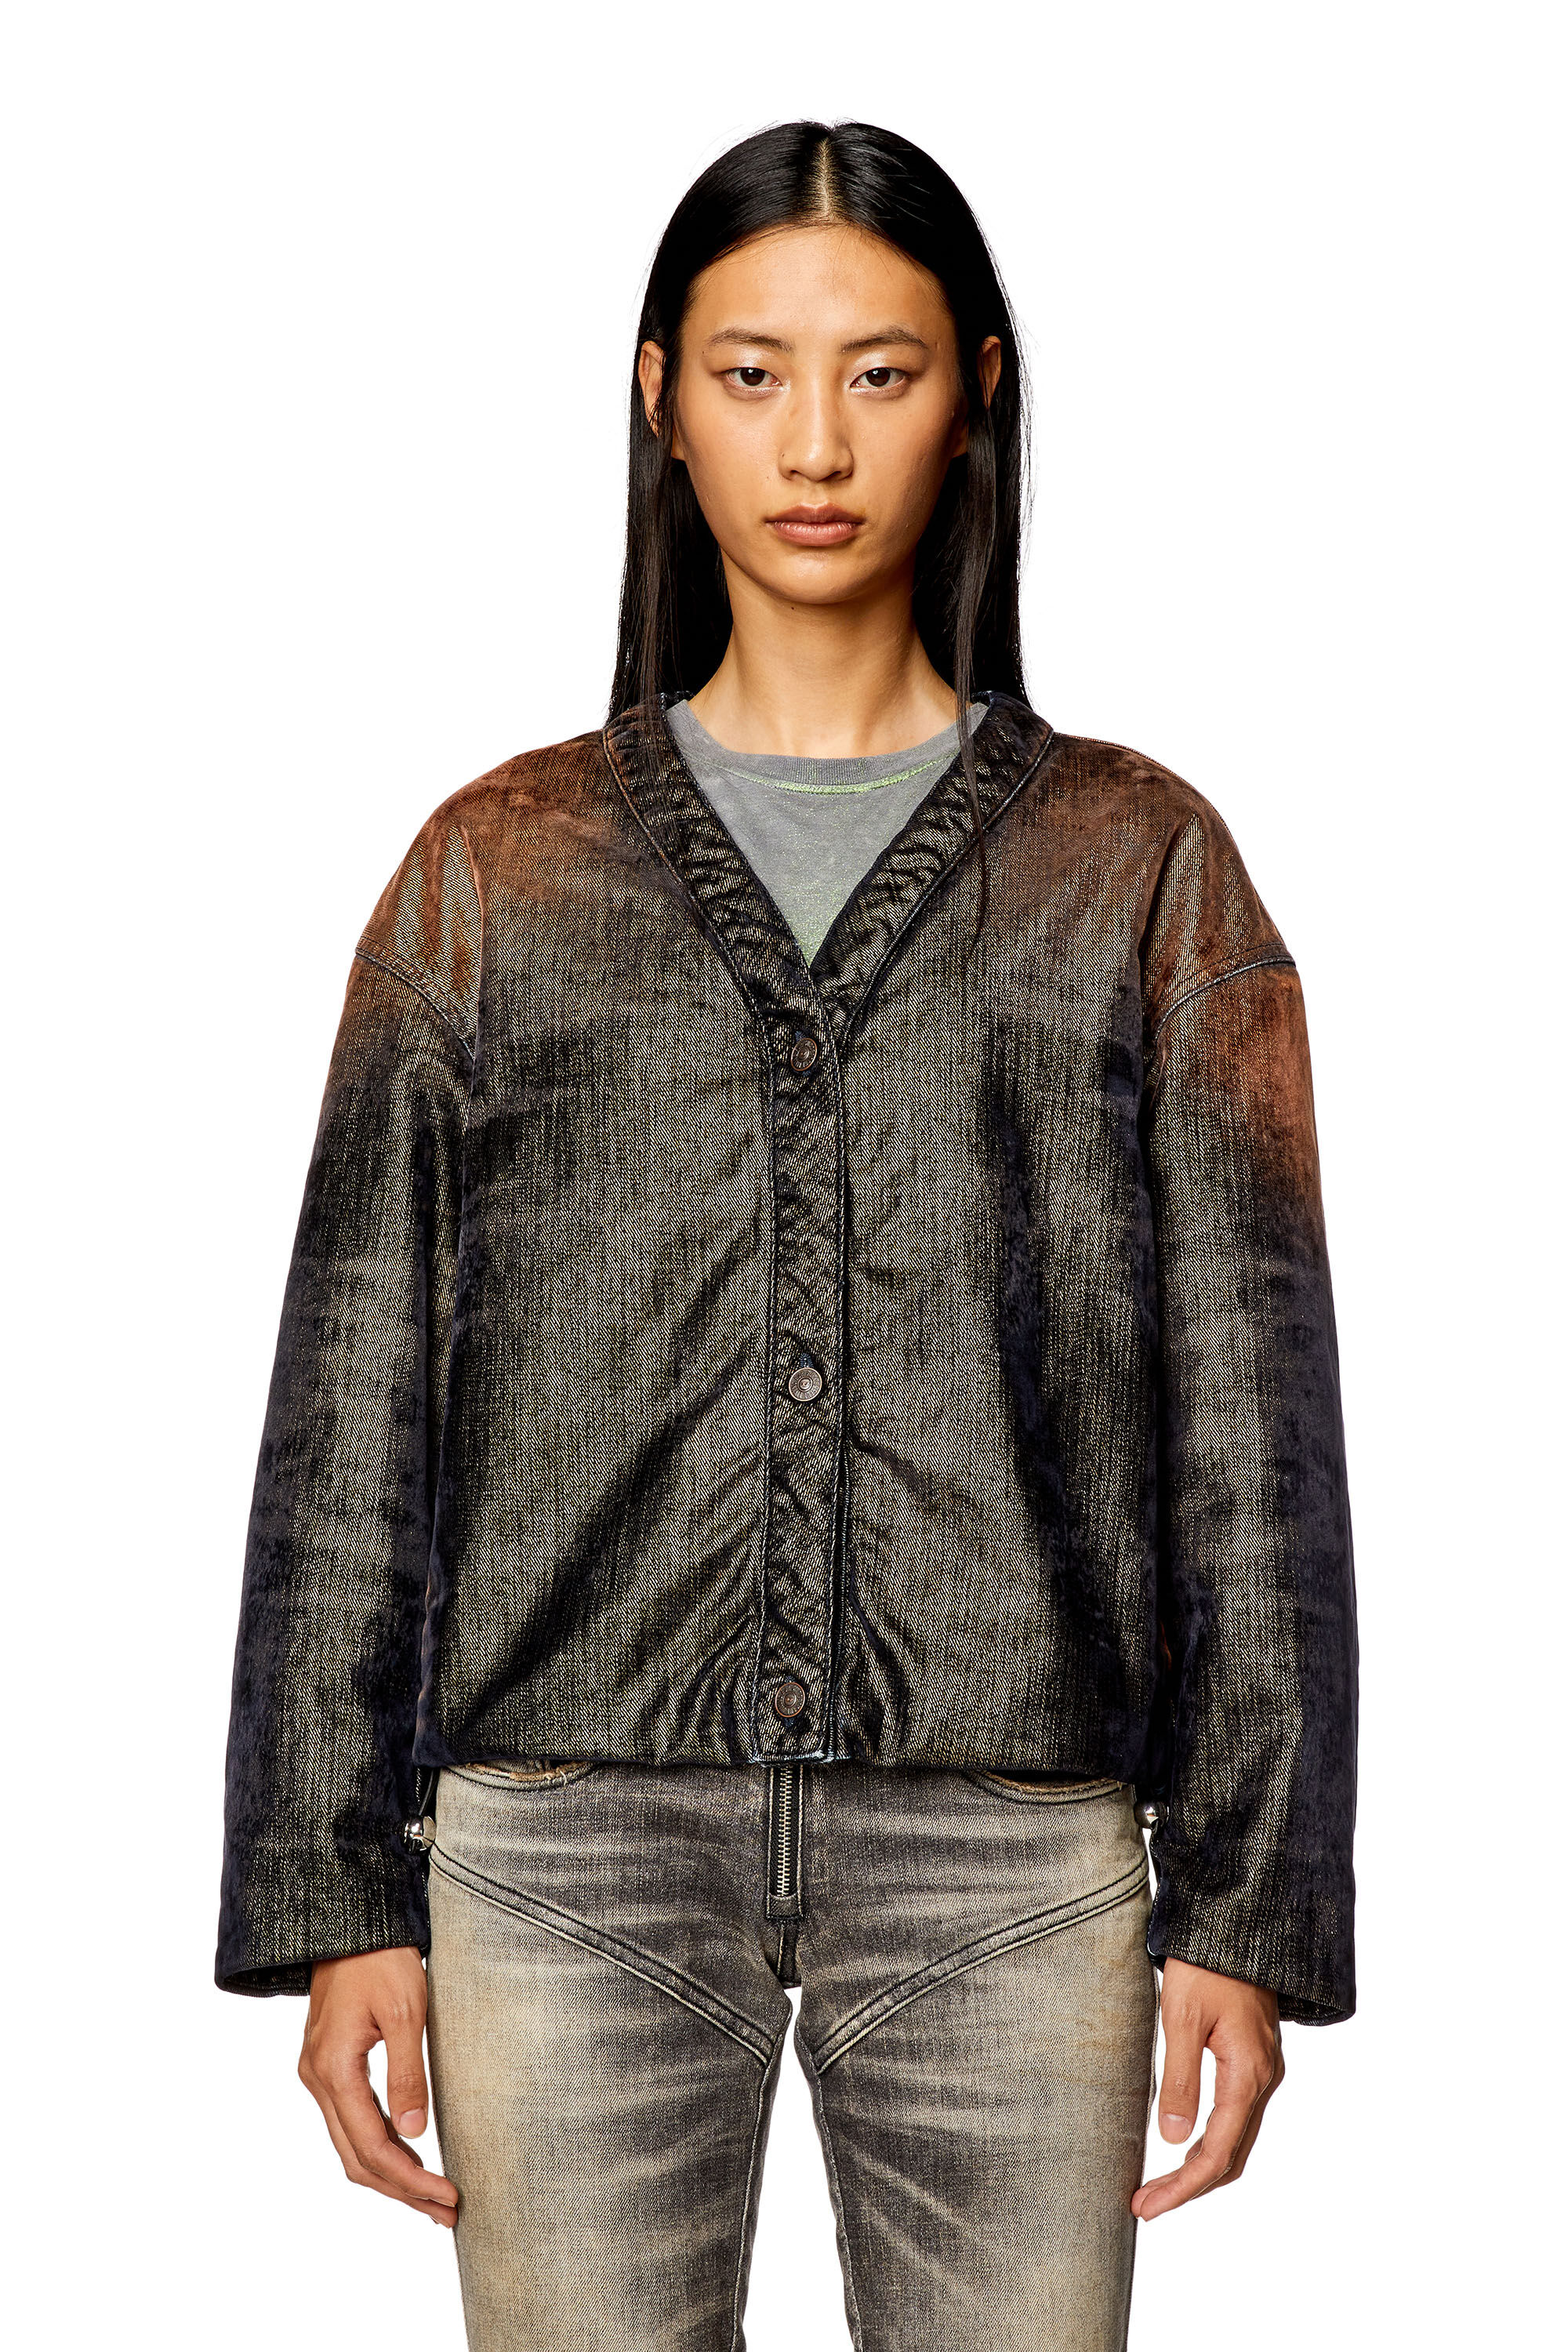 Diesel - DE-CONF-S, Woman Jacket in shimmery denim in Multicolor - Image 6